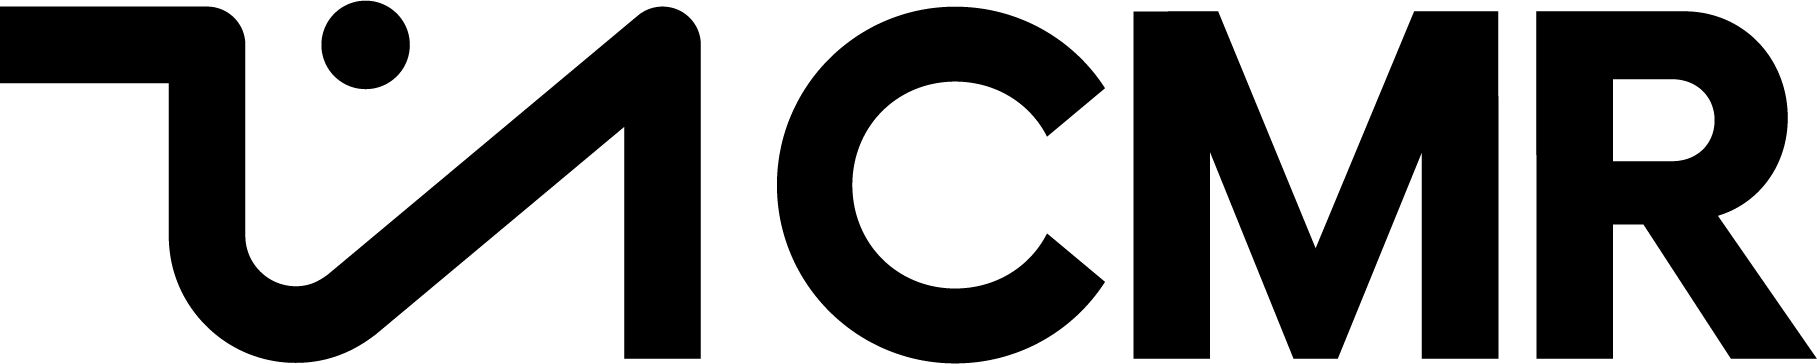 label francais chinese man records logo